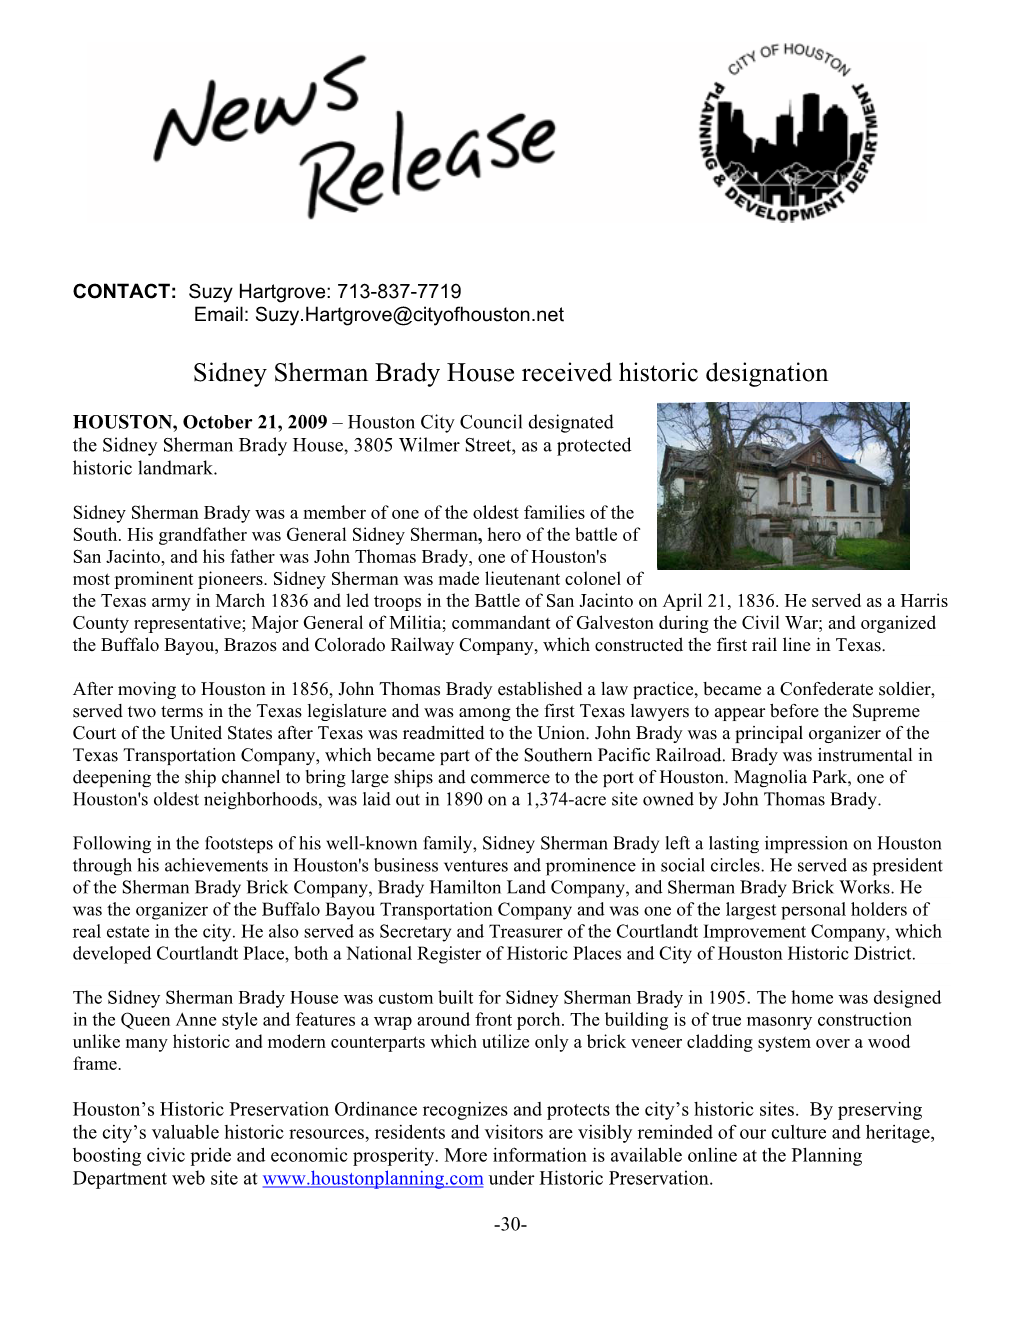 Sidney Sherman Brady House Received Historic Designation